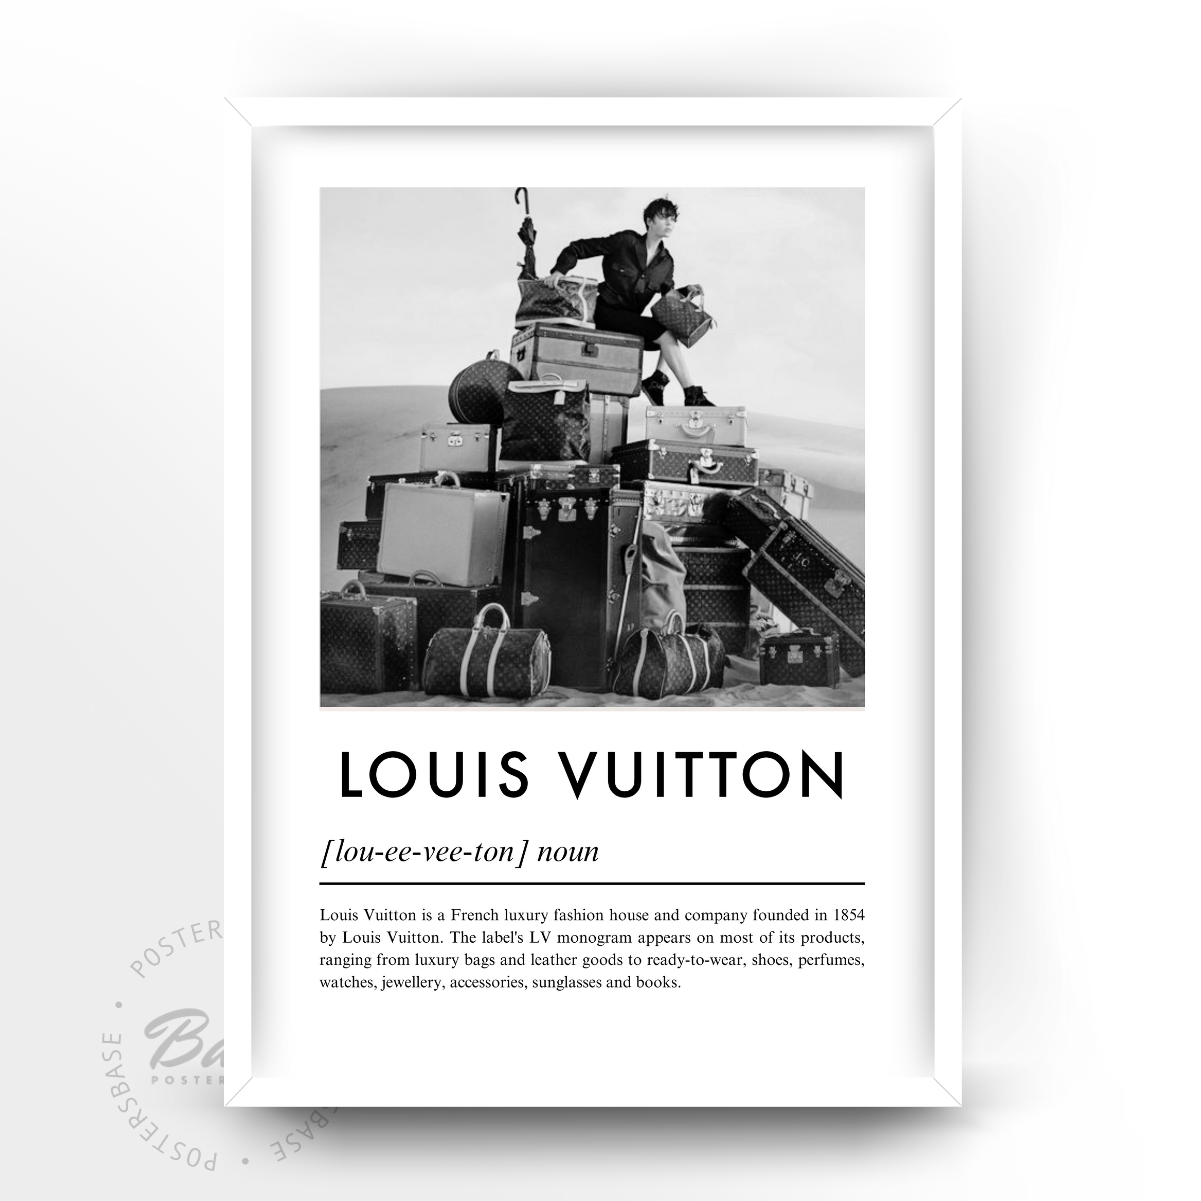 Louis Vuitton History